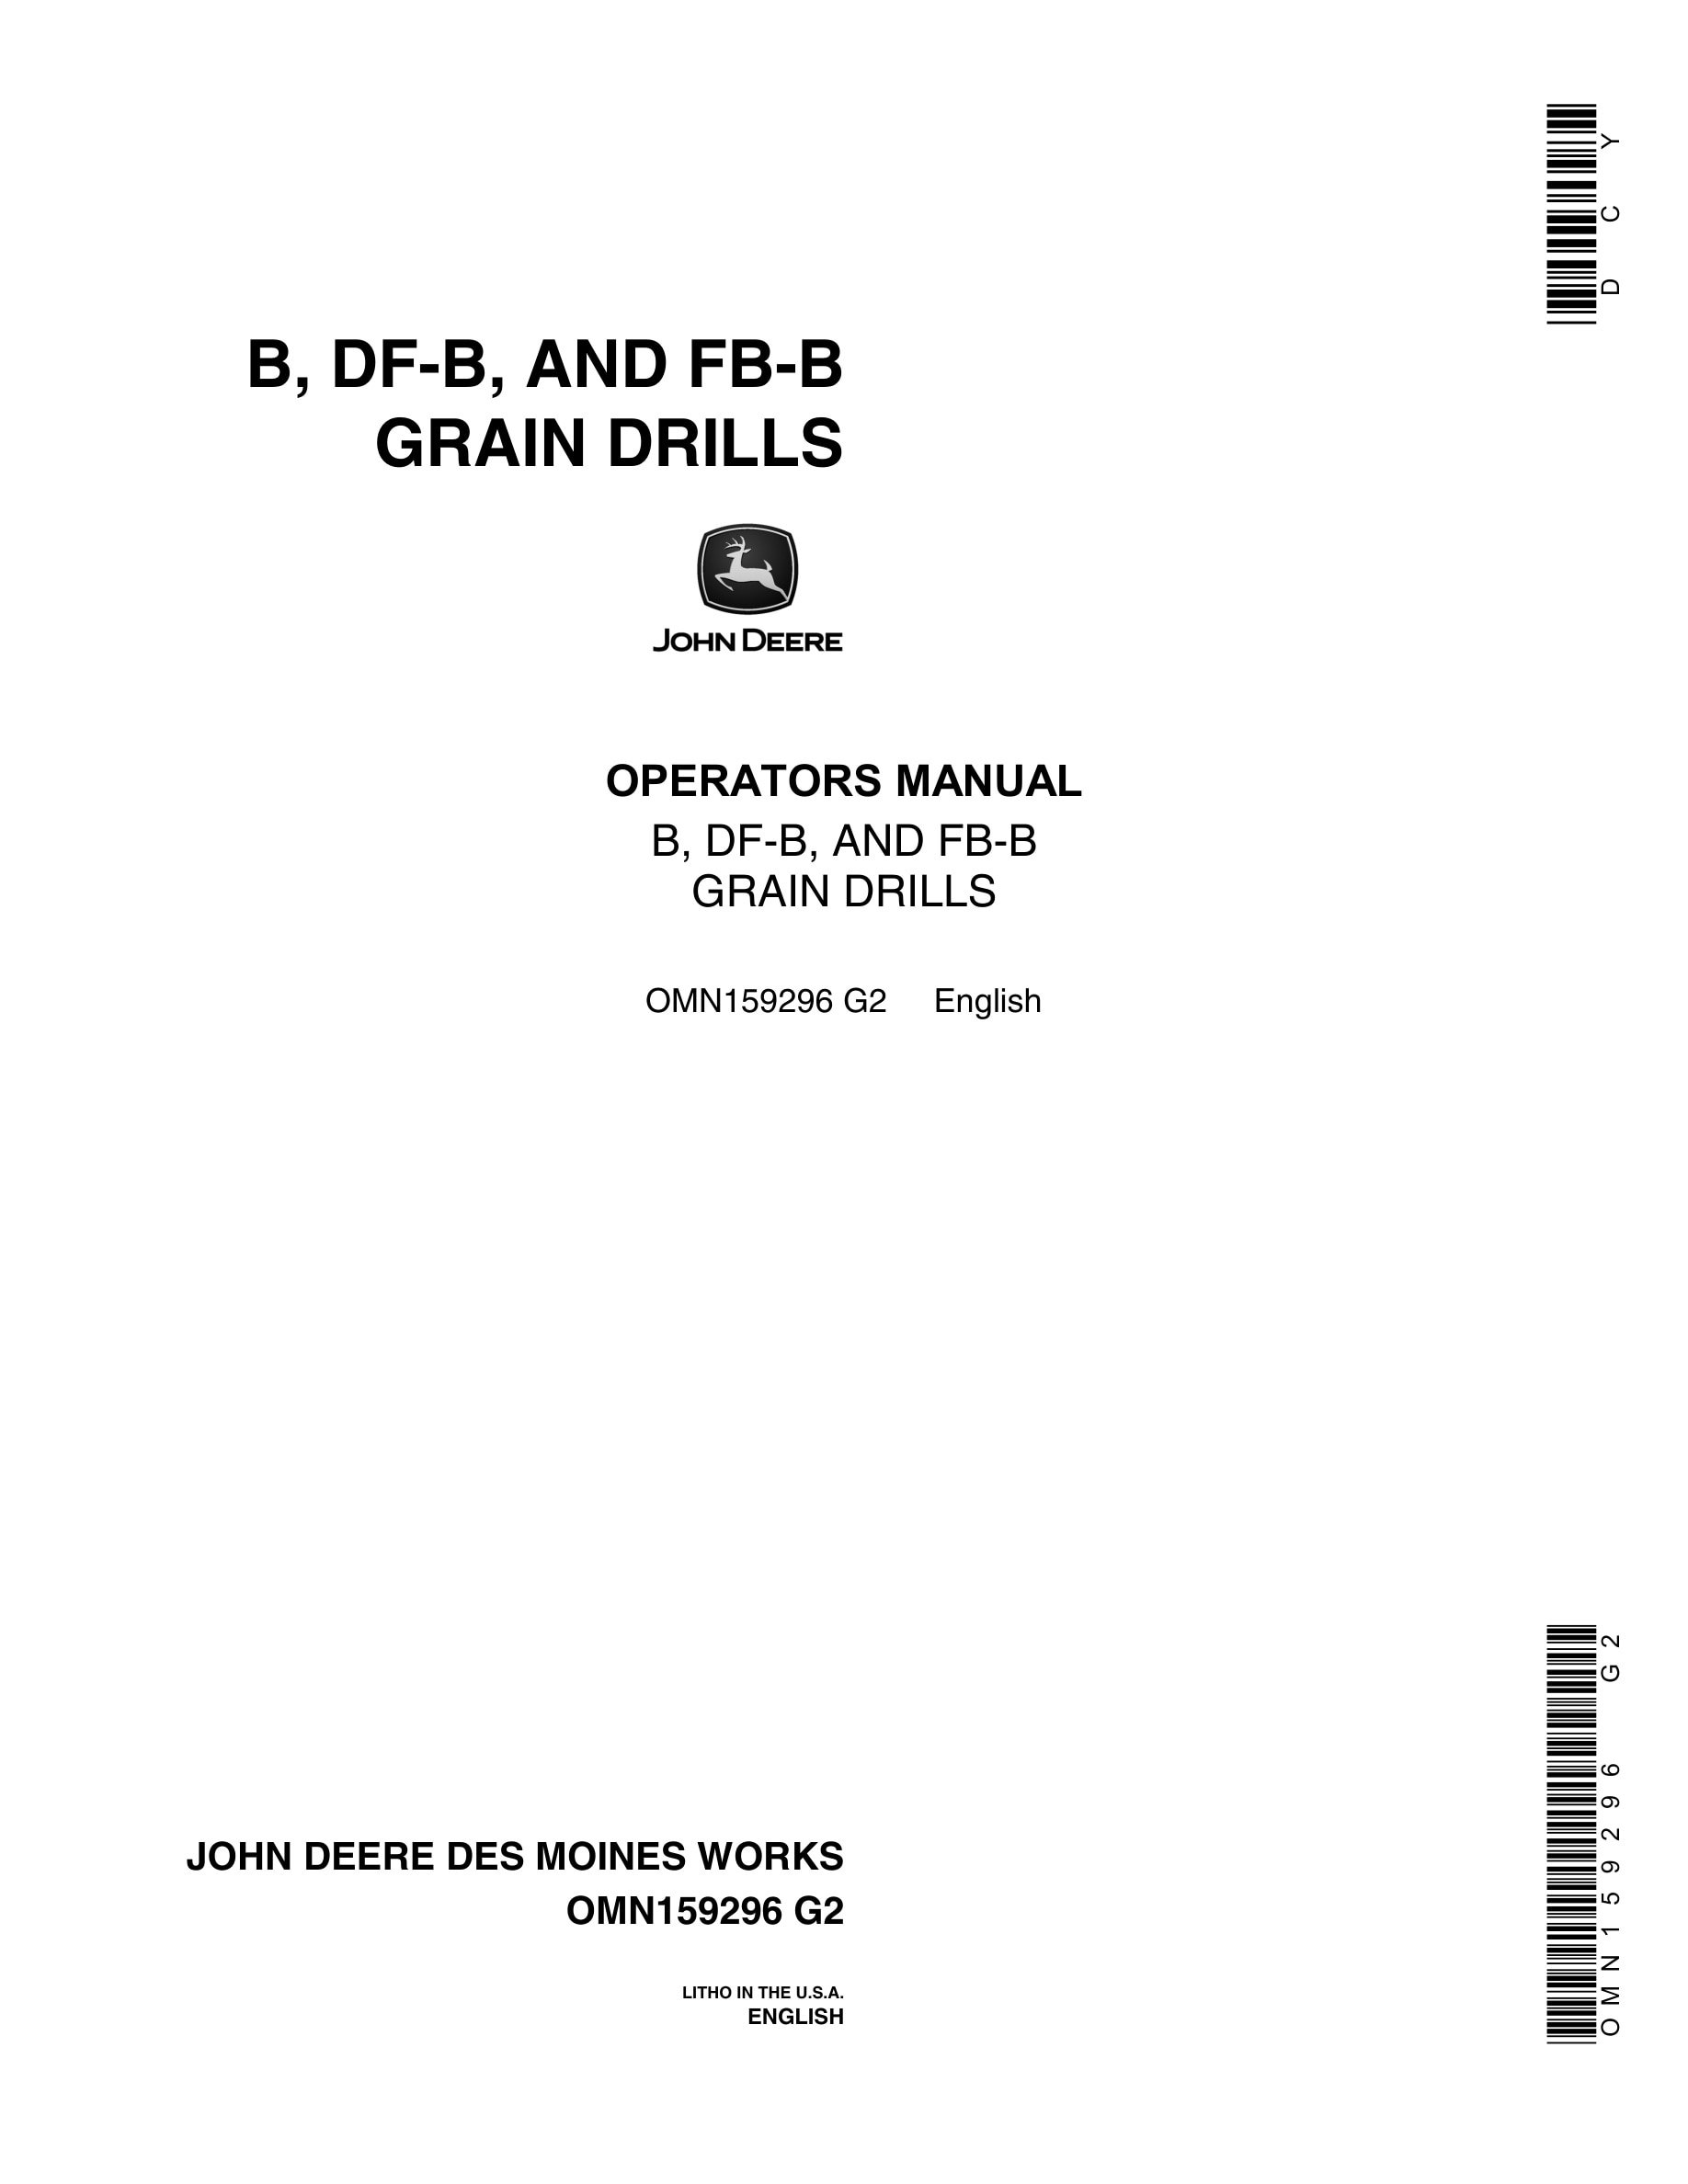 John Deere B, DF-B, AND FB-B GRAIN DRILL Operator Manual OMN159296-1